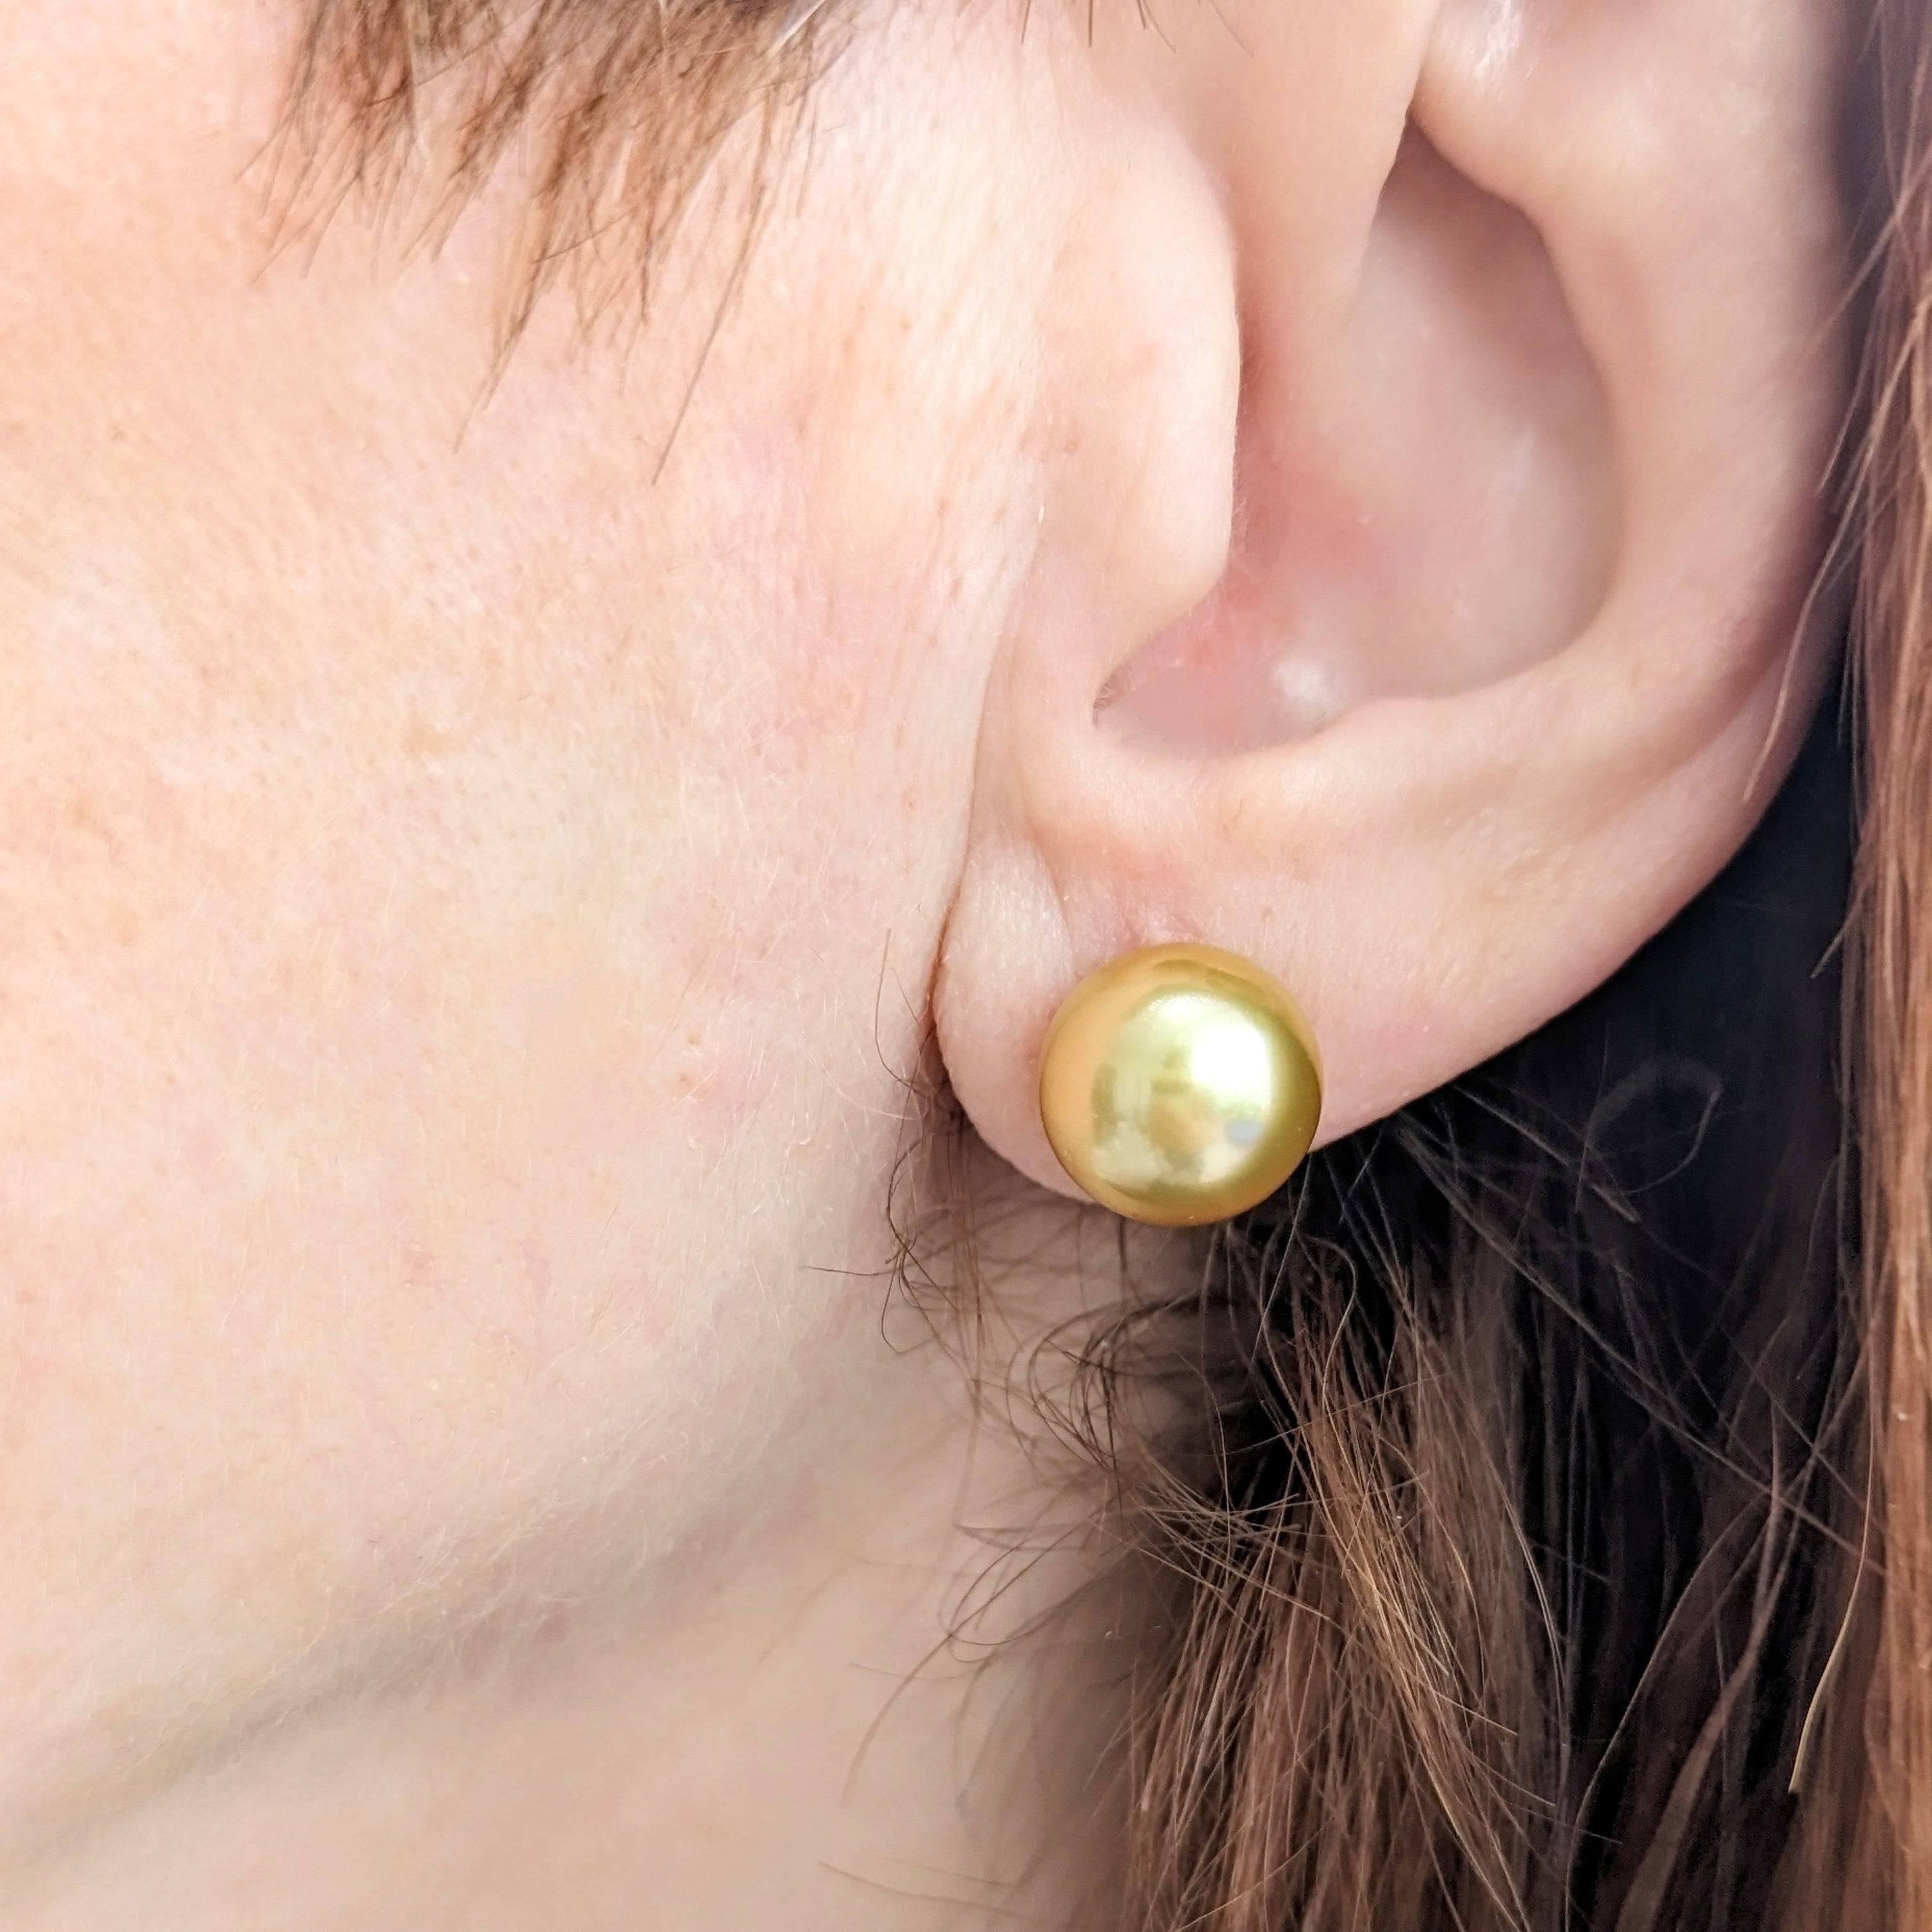 10-11mm Golden South Sea Pearl Stud Earrings - Marina Korneev Fine Pearls